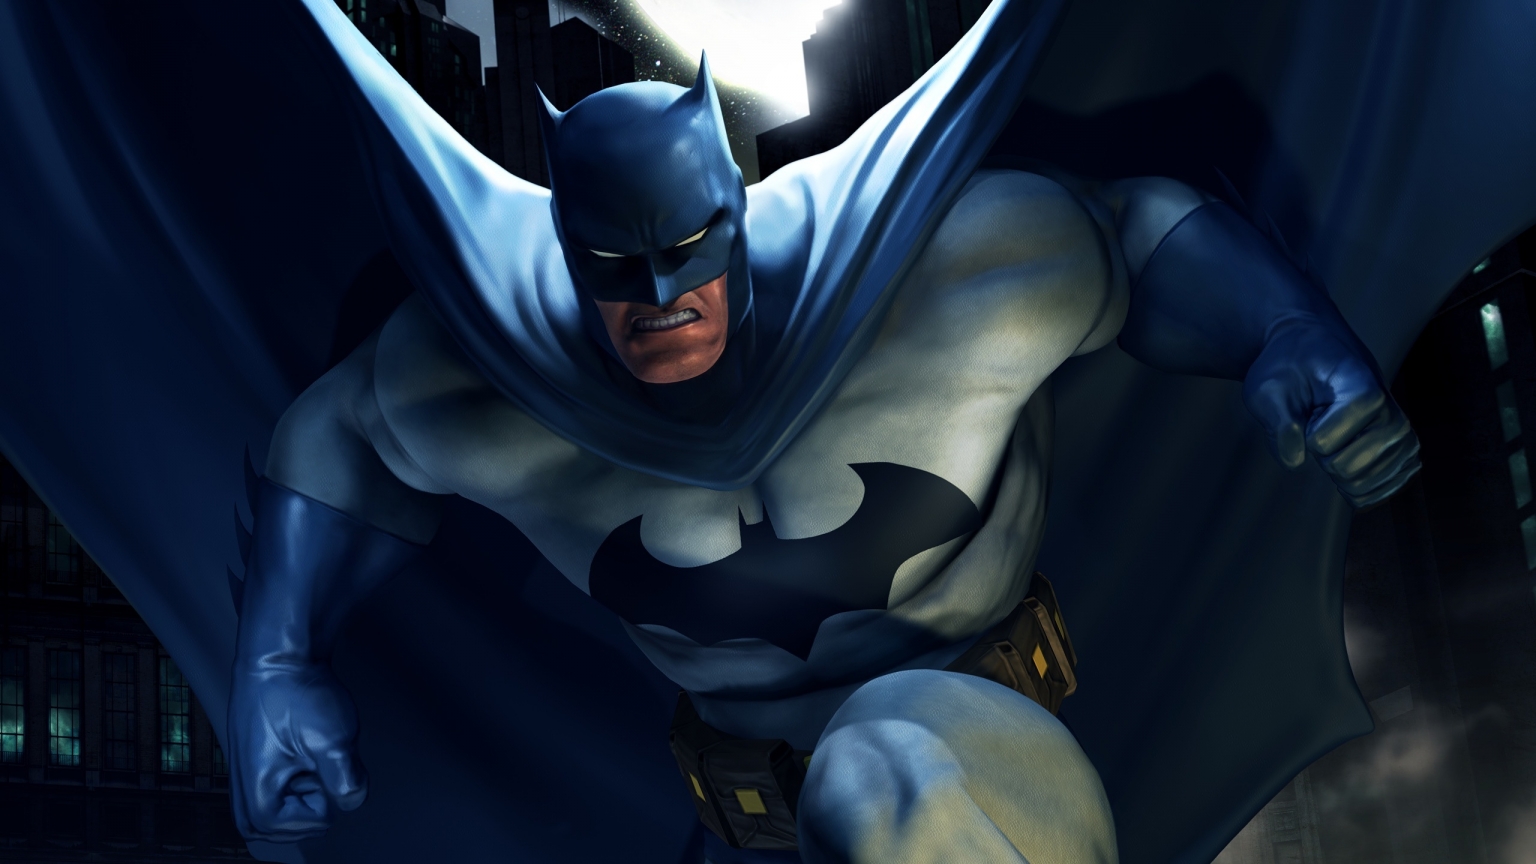 Batman DC Universe for 1536 x 864 HDTV resolution